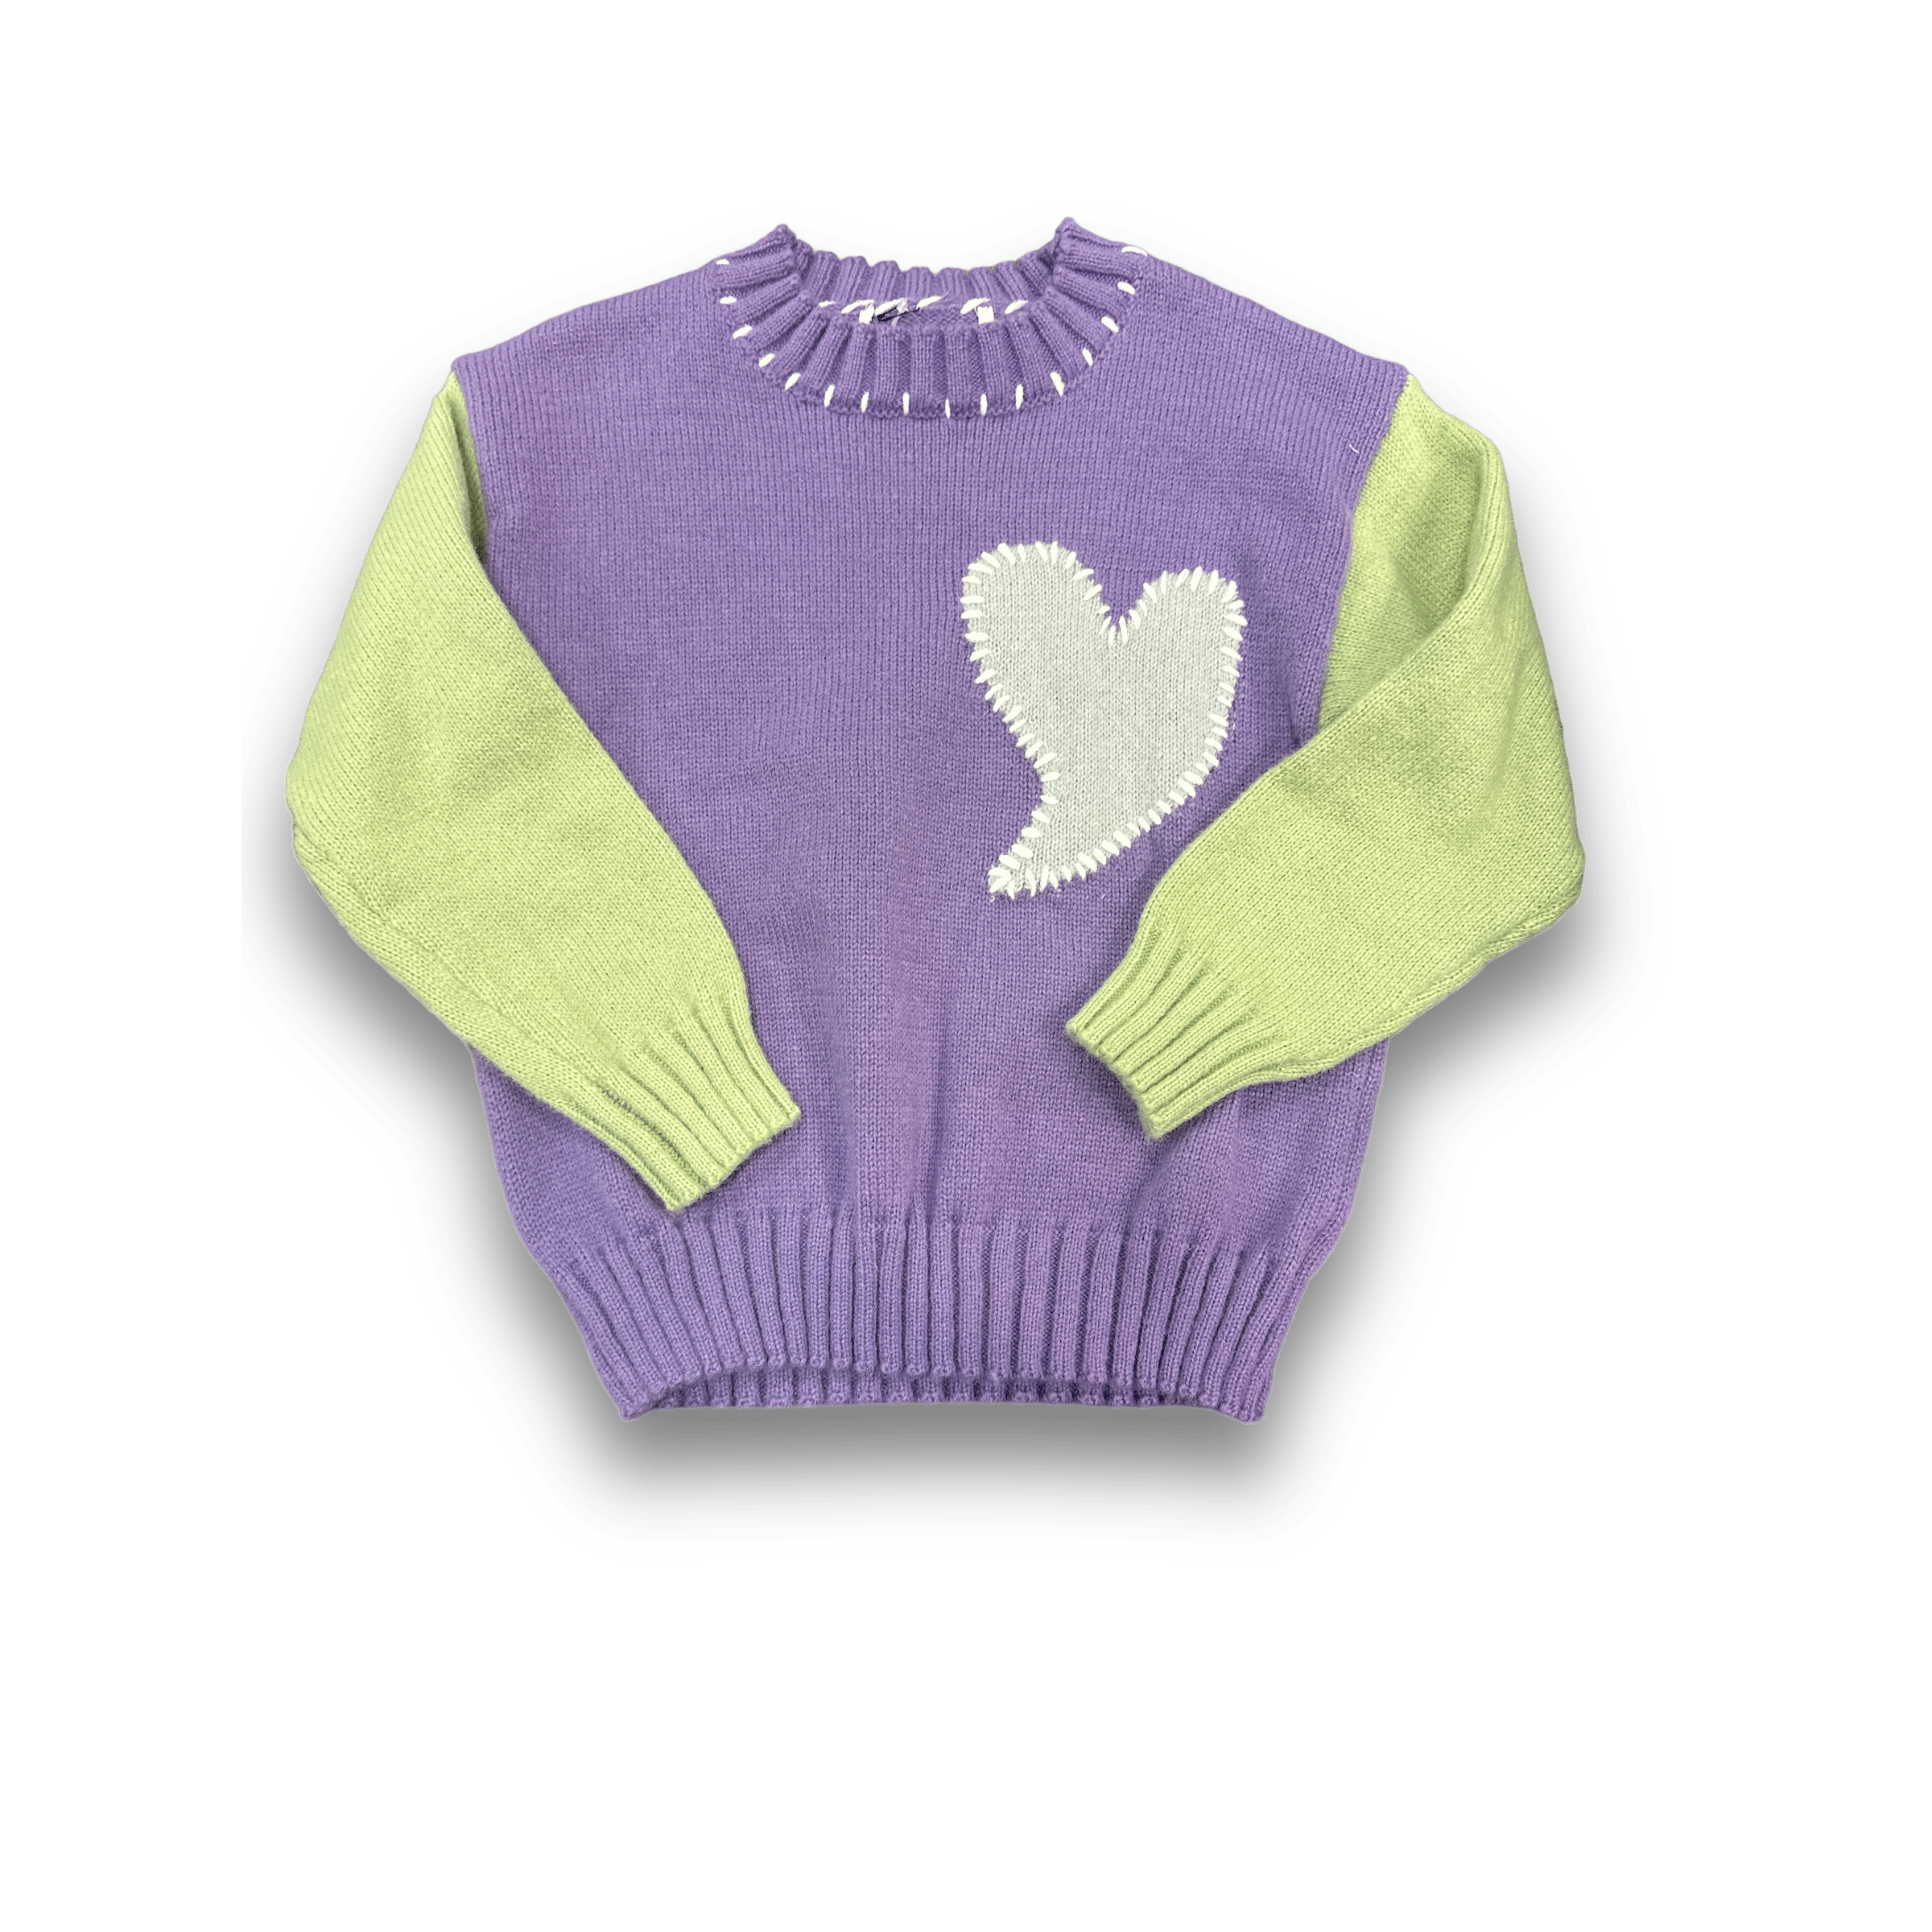 aria kai Stitched heart Colorblock Sweater